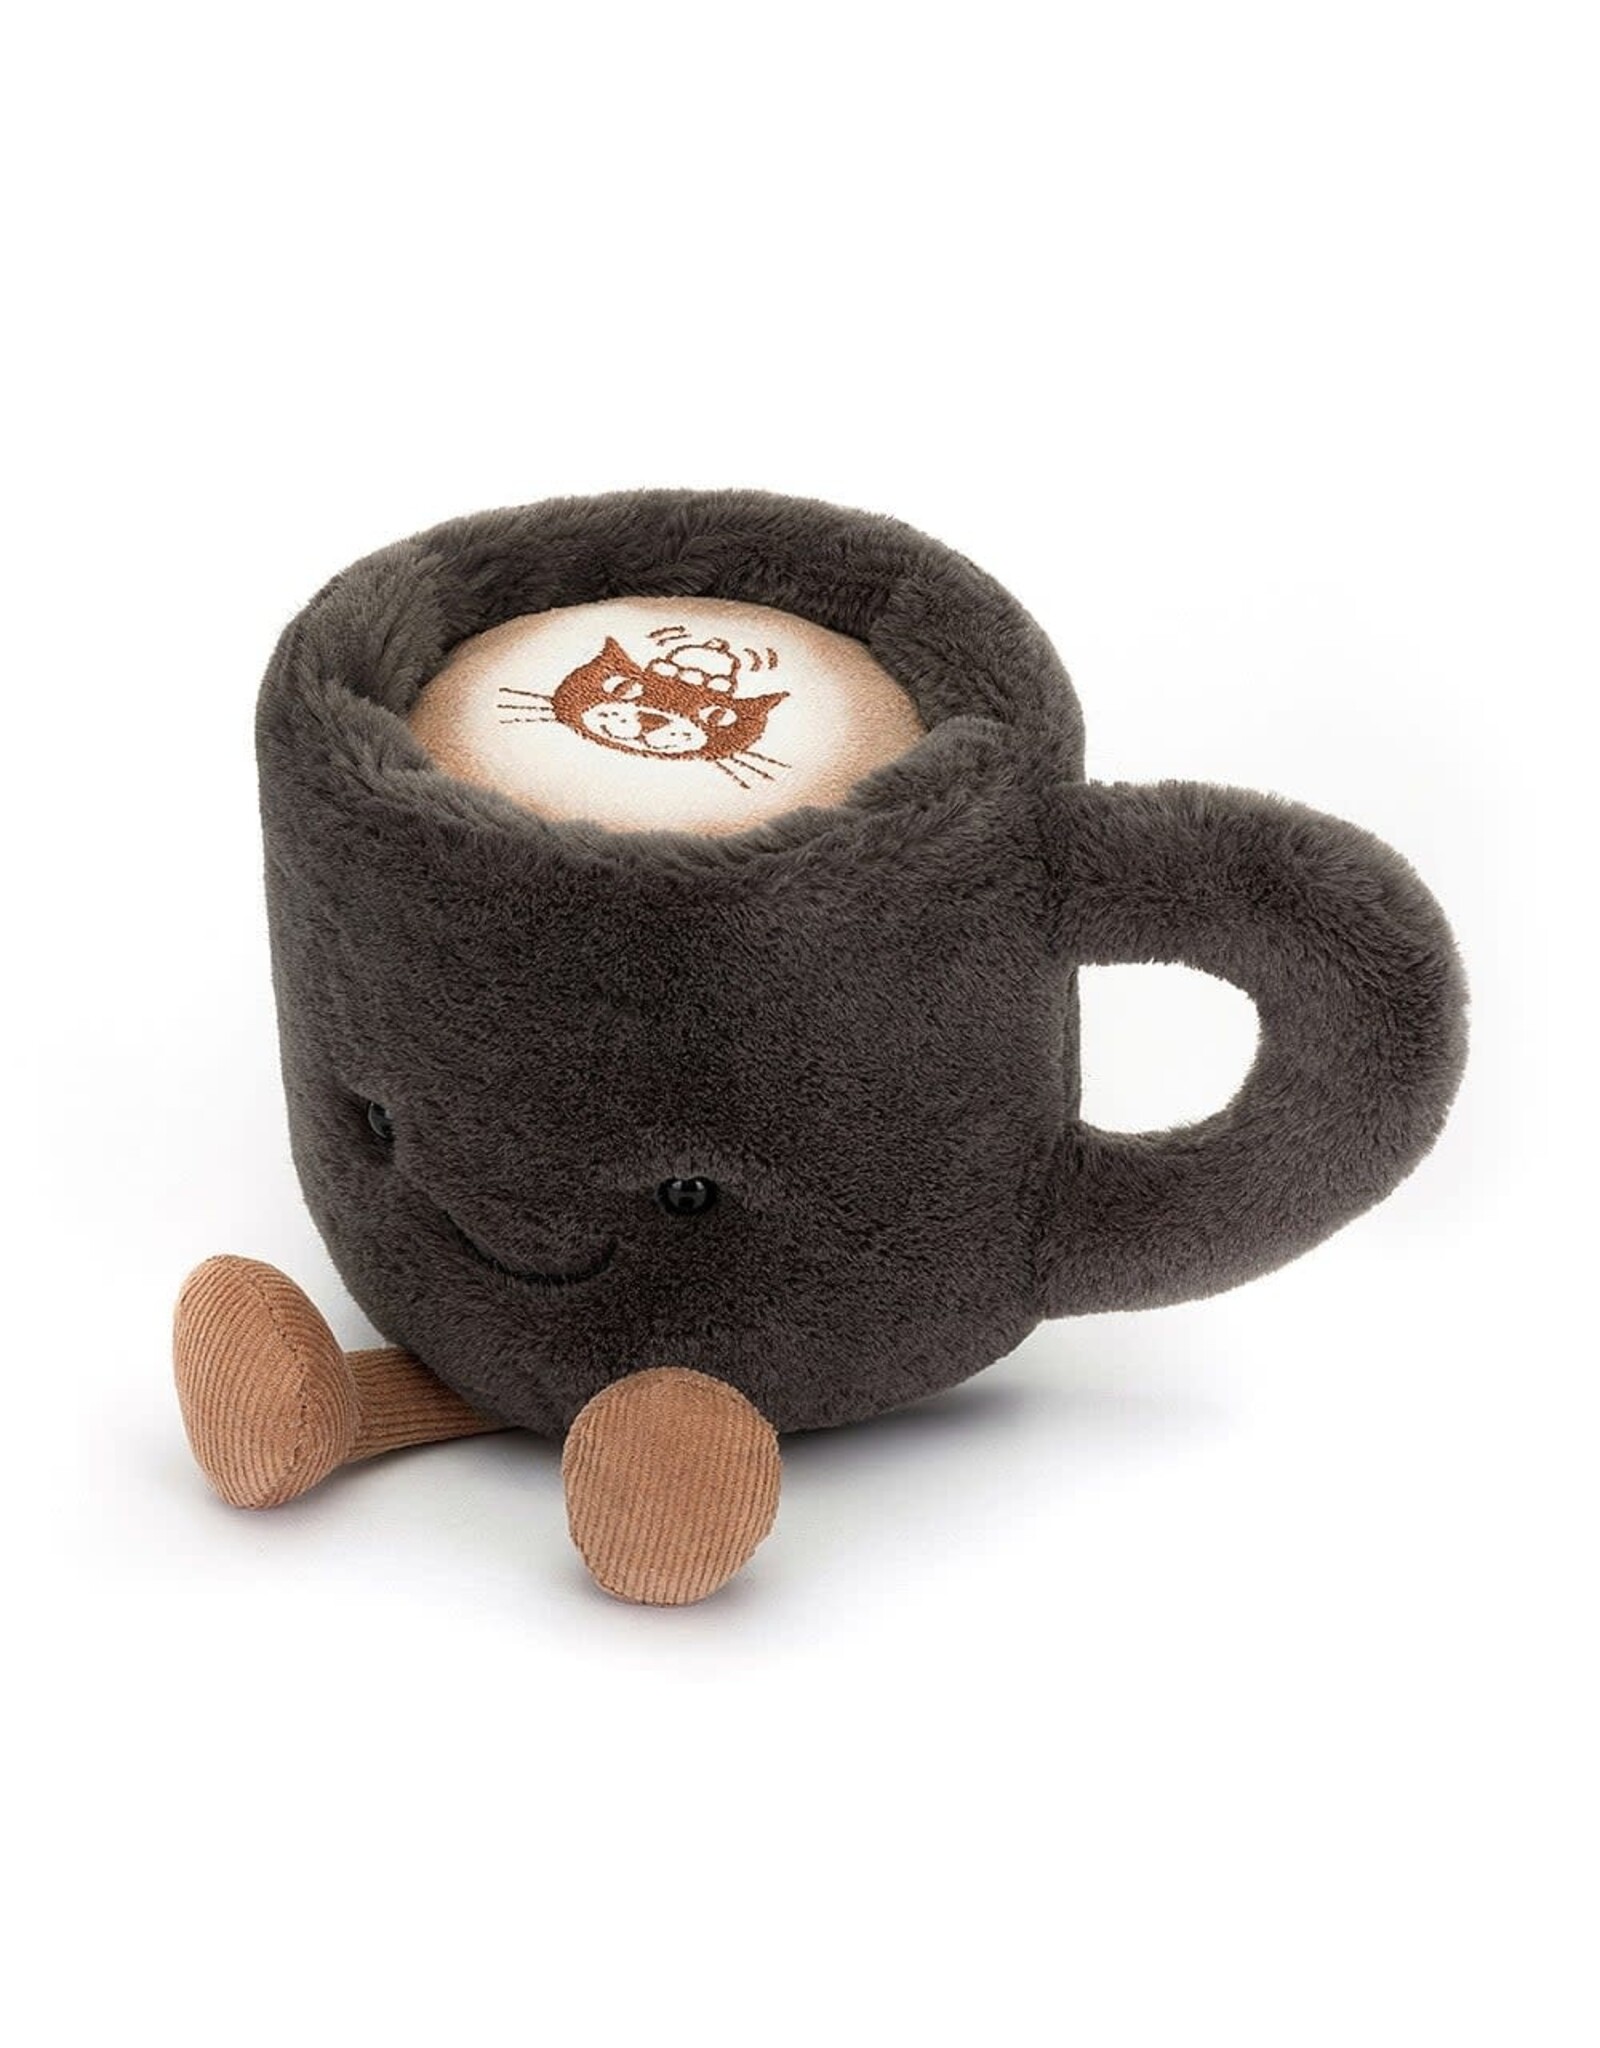 Jellycat Knuffel - Amuseable - Coffee Cup